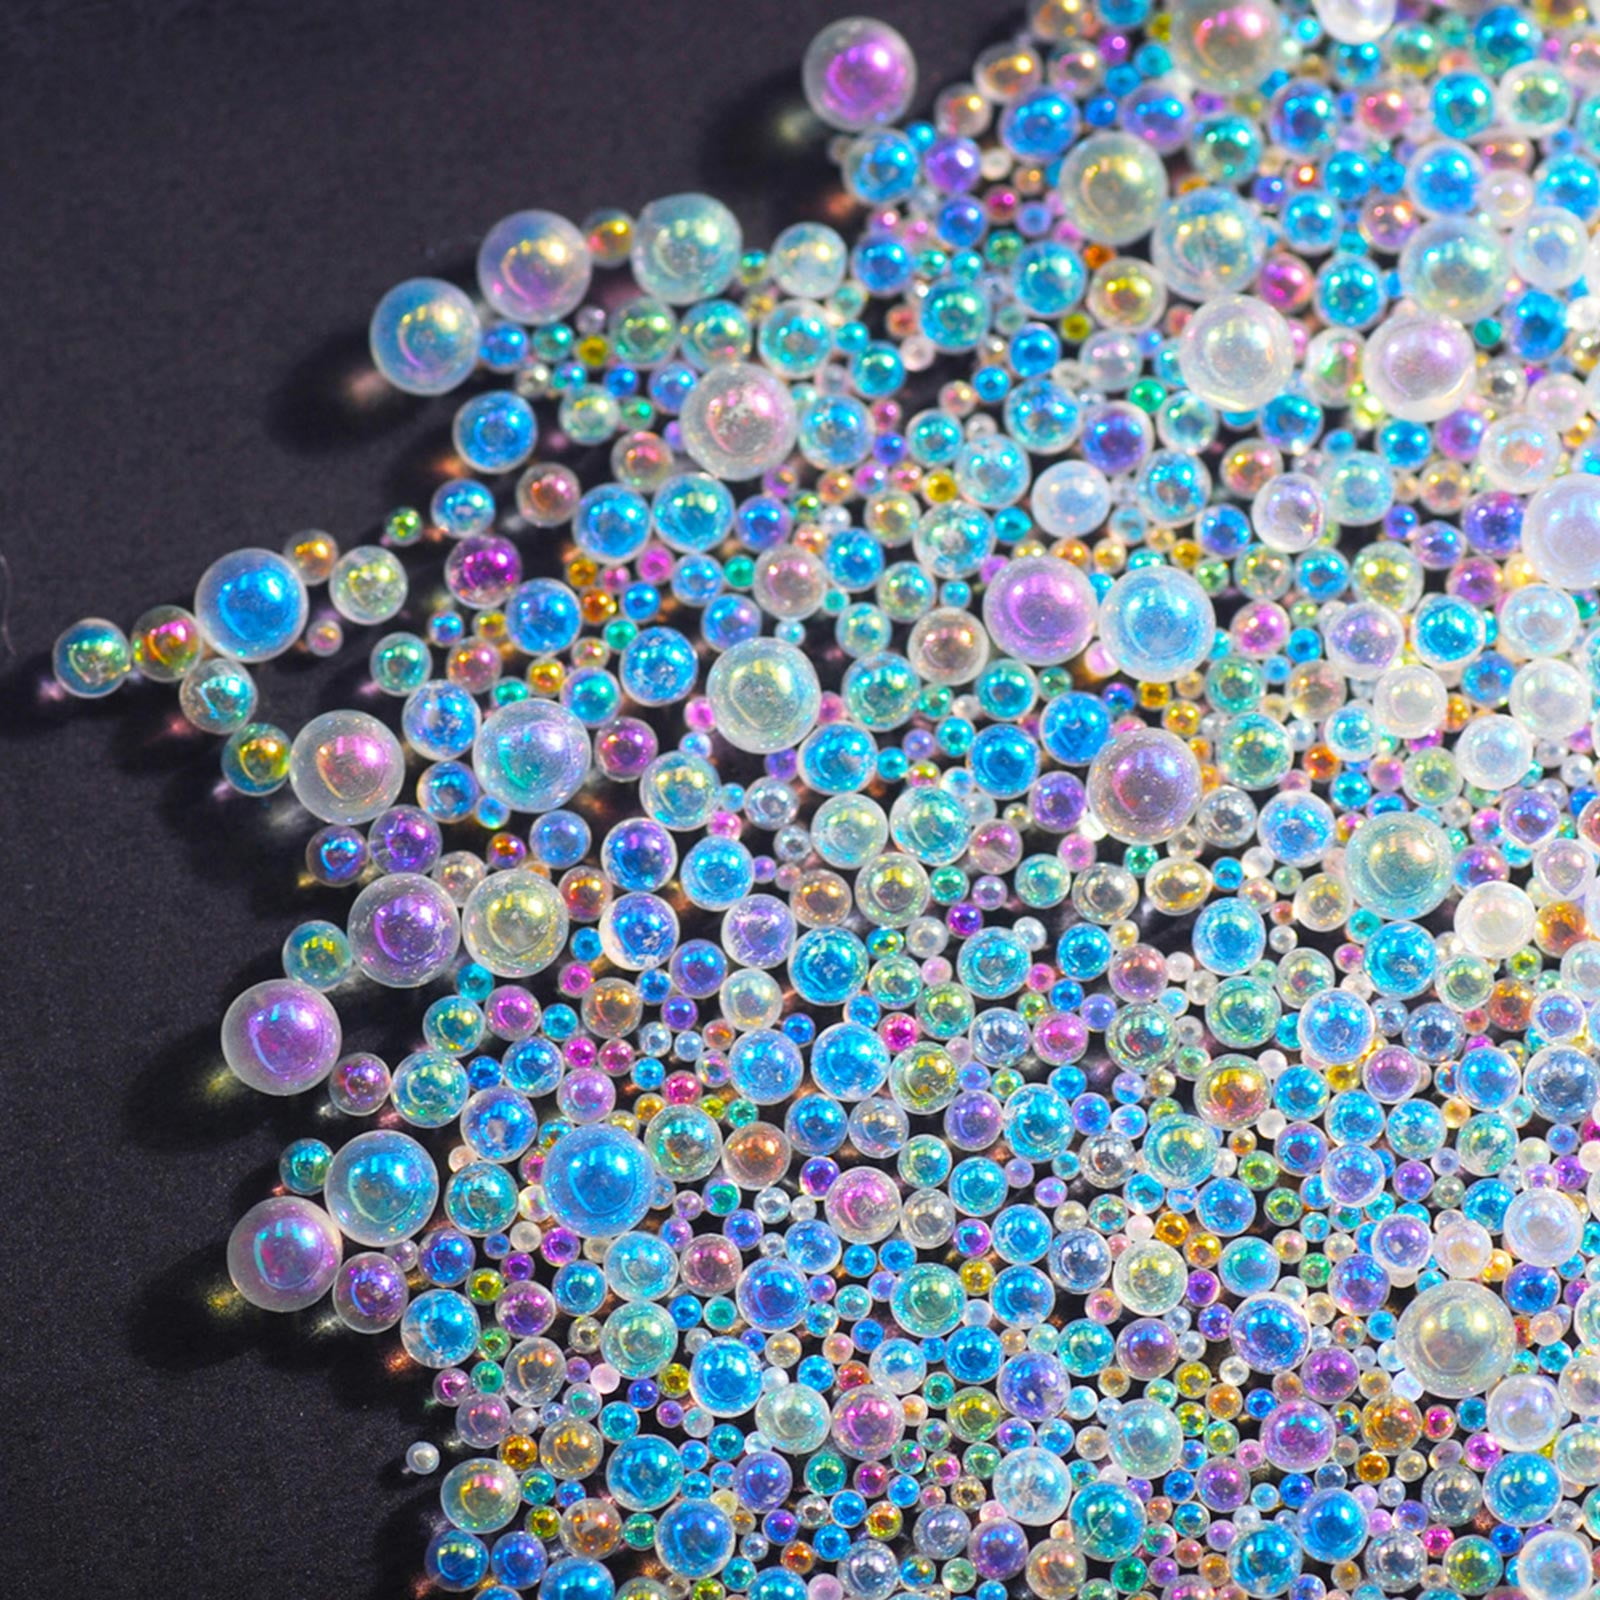 Keusn Nail Beads Reflective Bubble Balls Nail Beads 3D Mini Flash Fingernail Rhinestones Decoration for DIY Salon Design, Size: One Size